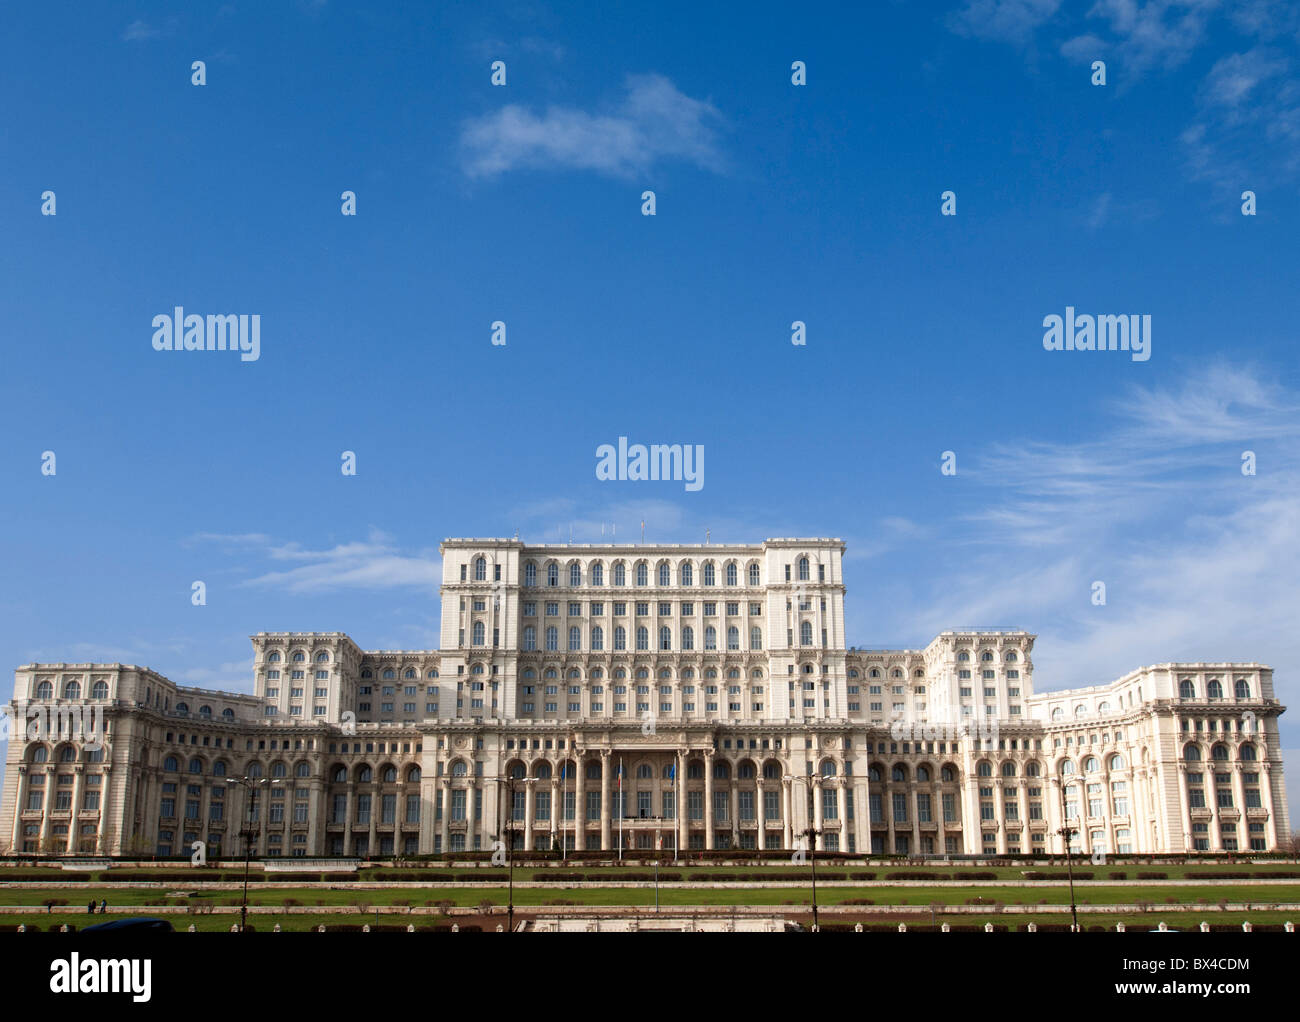 Der Palast des Parlaments beherbergt heute rumänischen Senat in Bukarest Rumänien Stockfoto